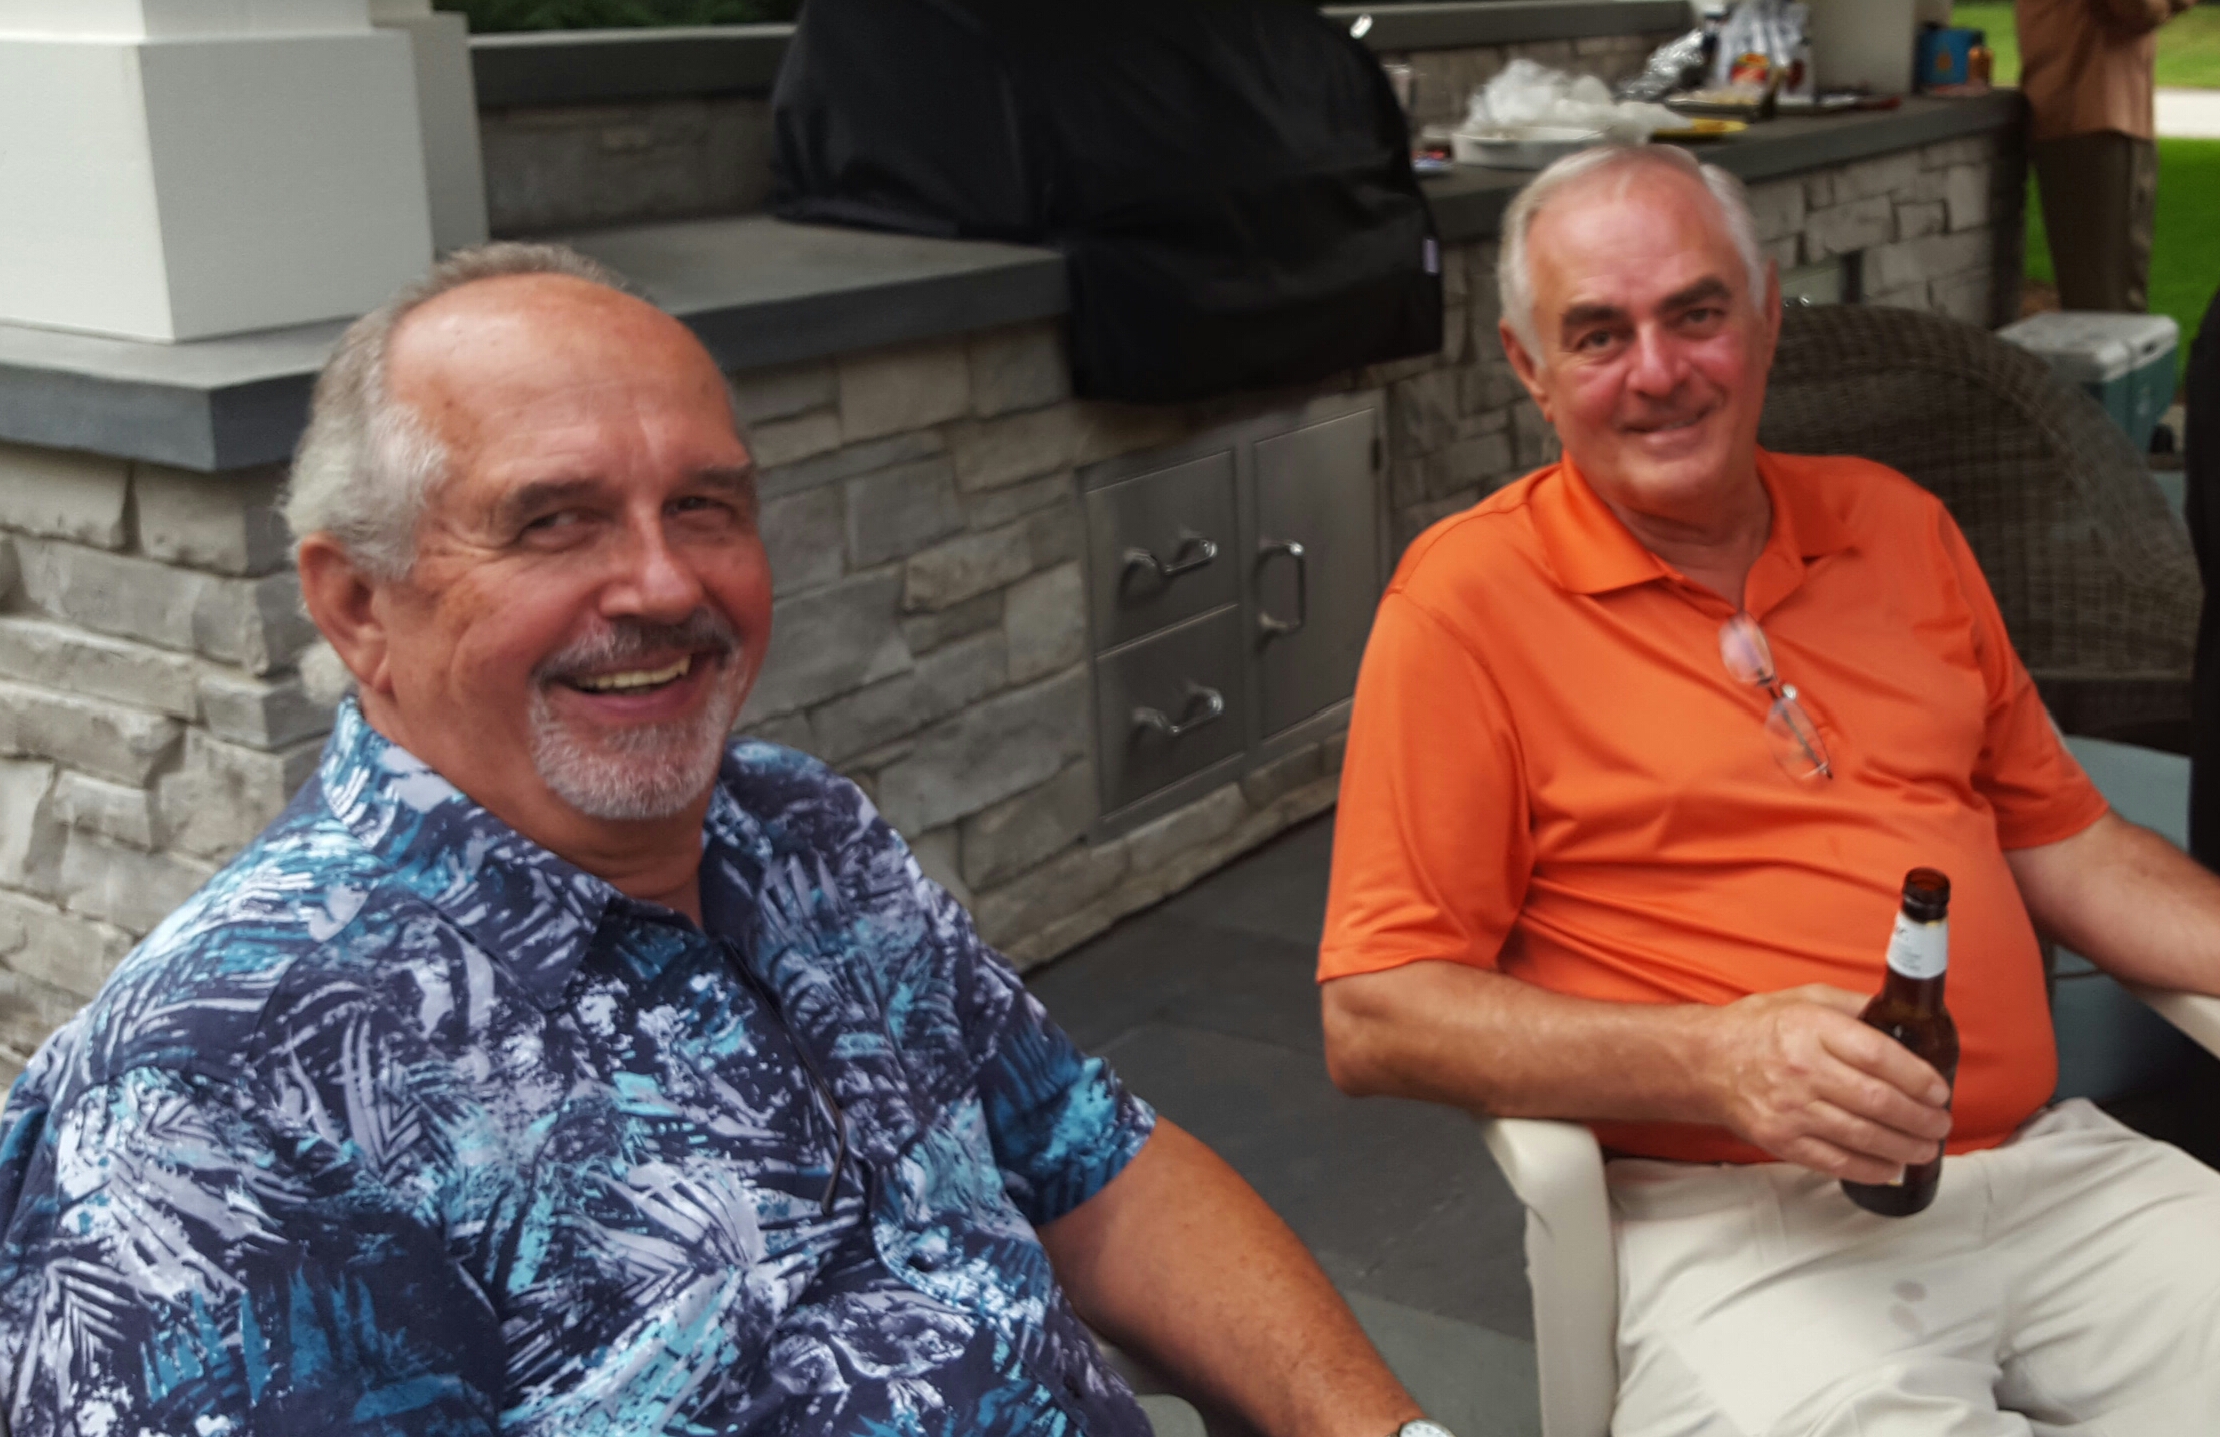 Long time Forum friends, Carl Boender and Bob Wehn